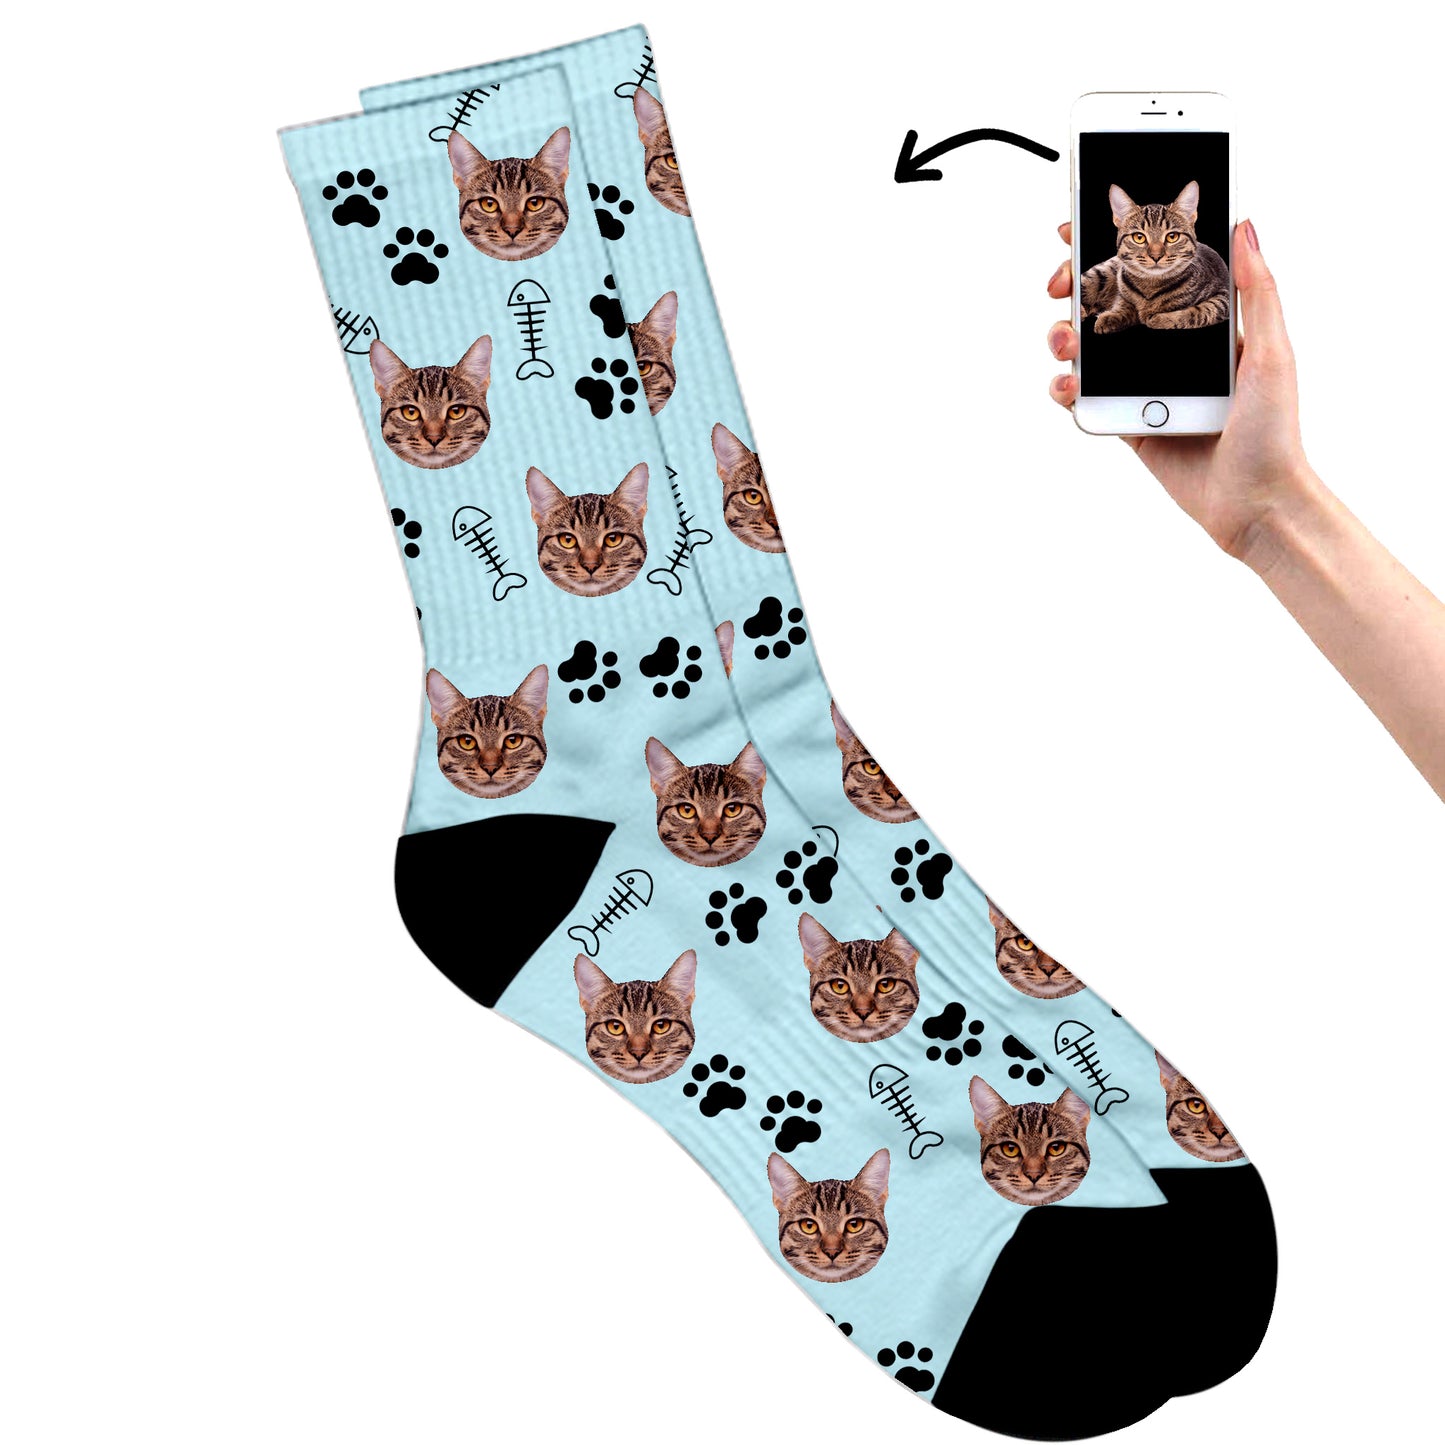 
                  
                    Cat On Socks
                  
                